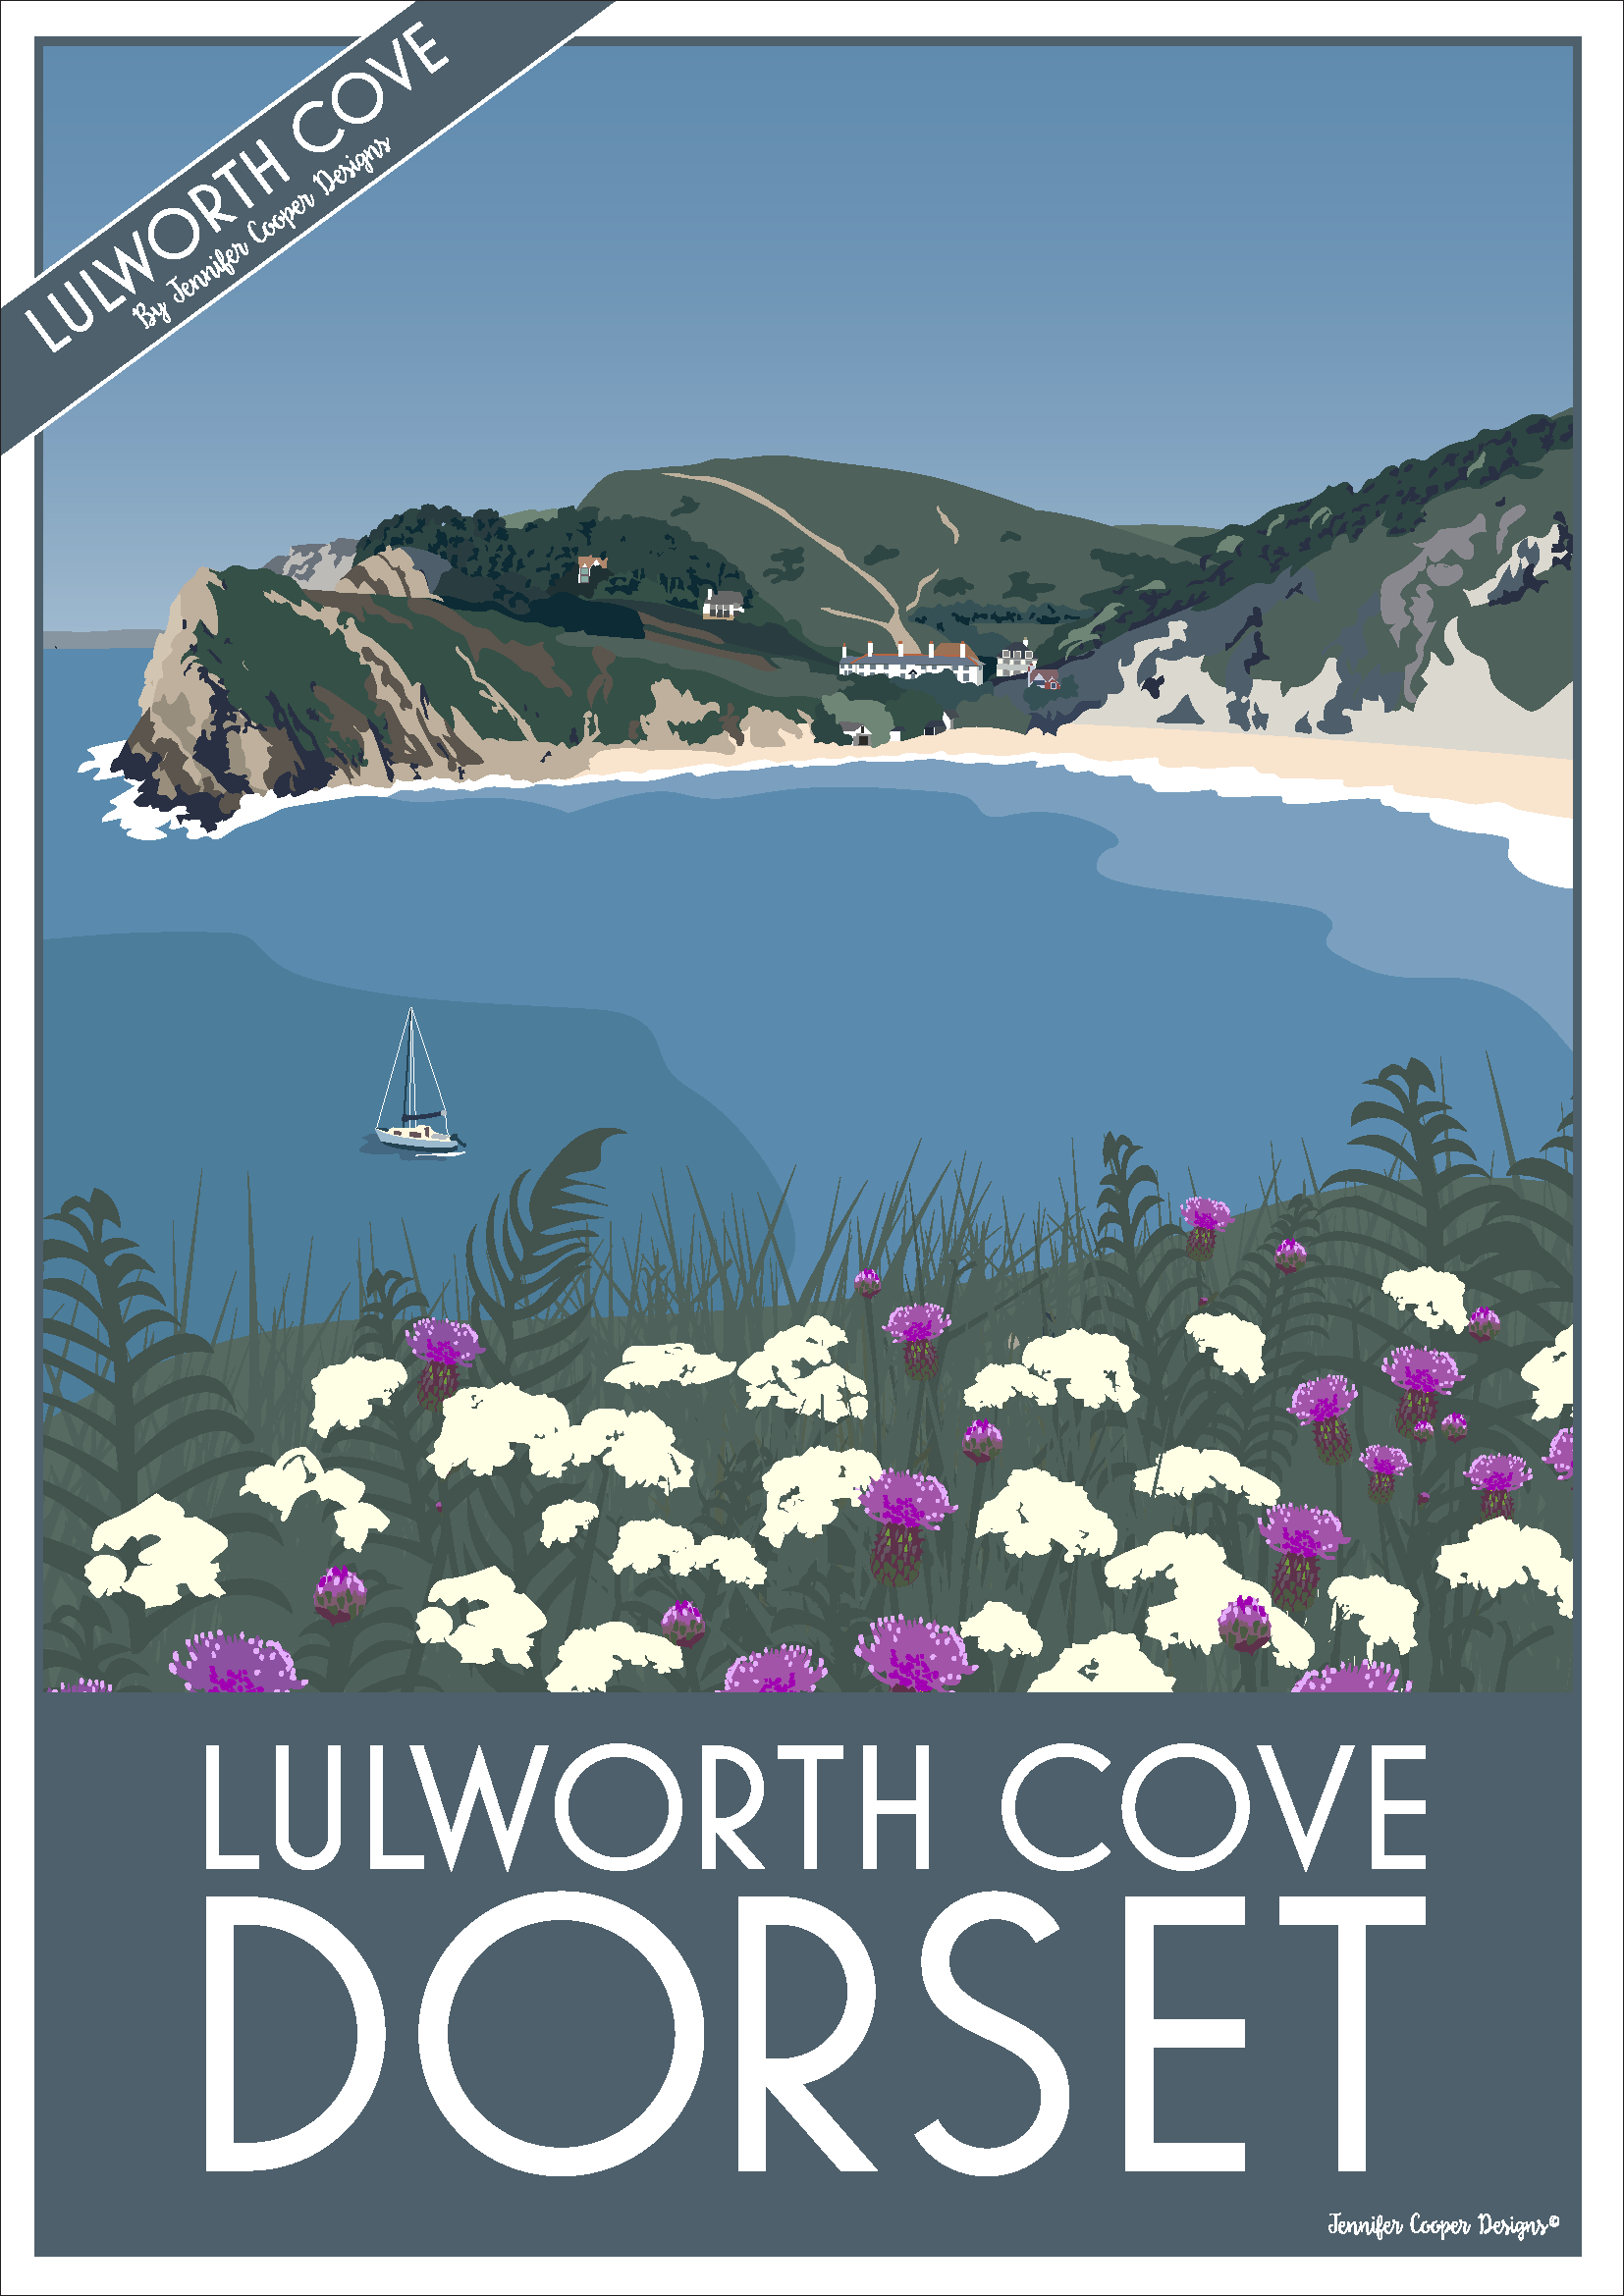 Lulworth Cove